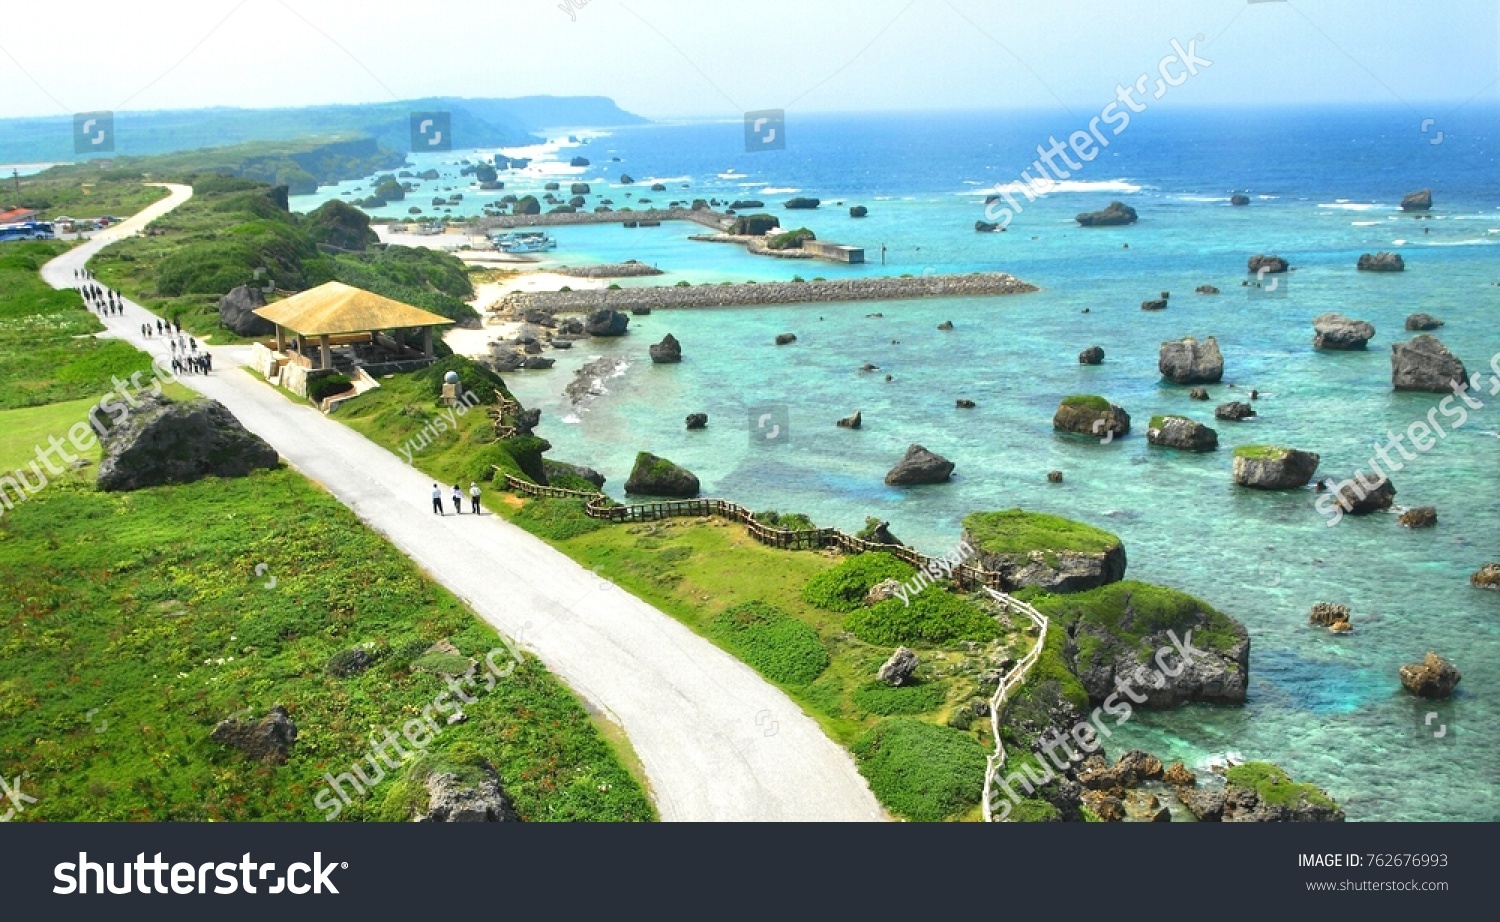 Okinawa Images, Stock Photos & Vectors | Shutterstock